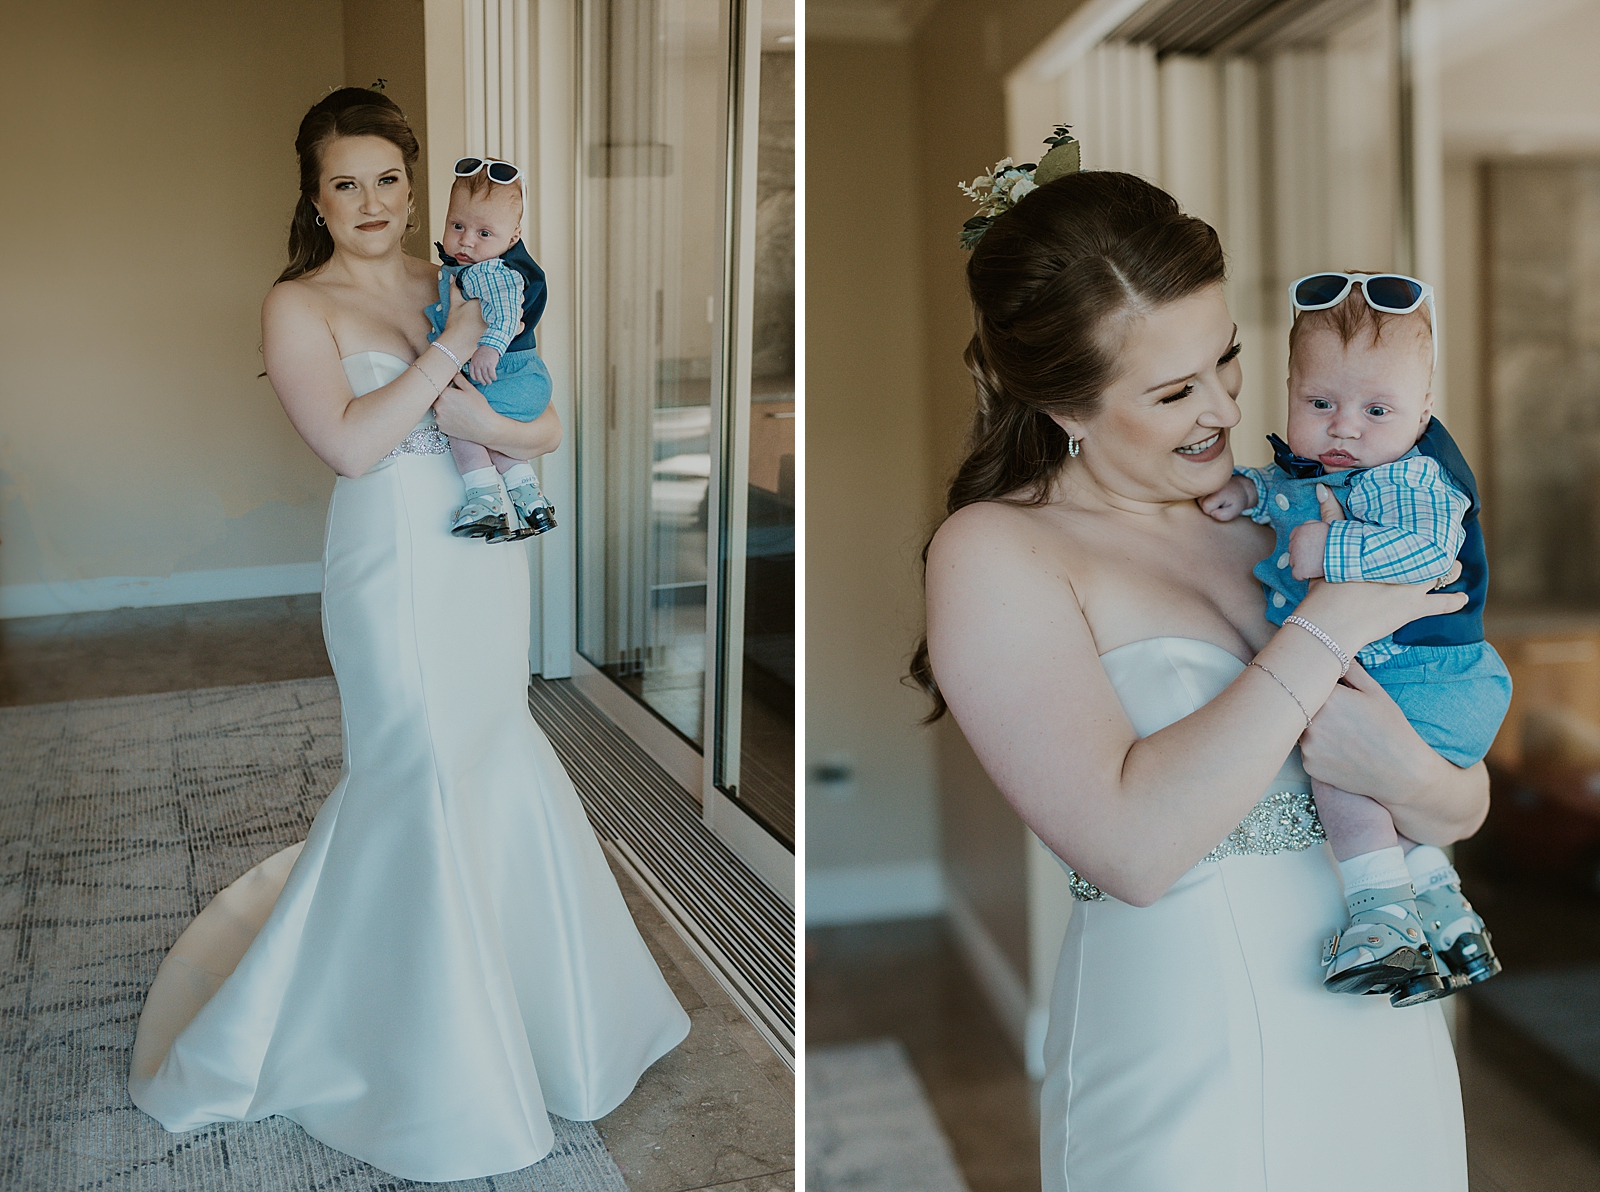 Bride in wedding dress holding baby